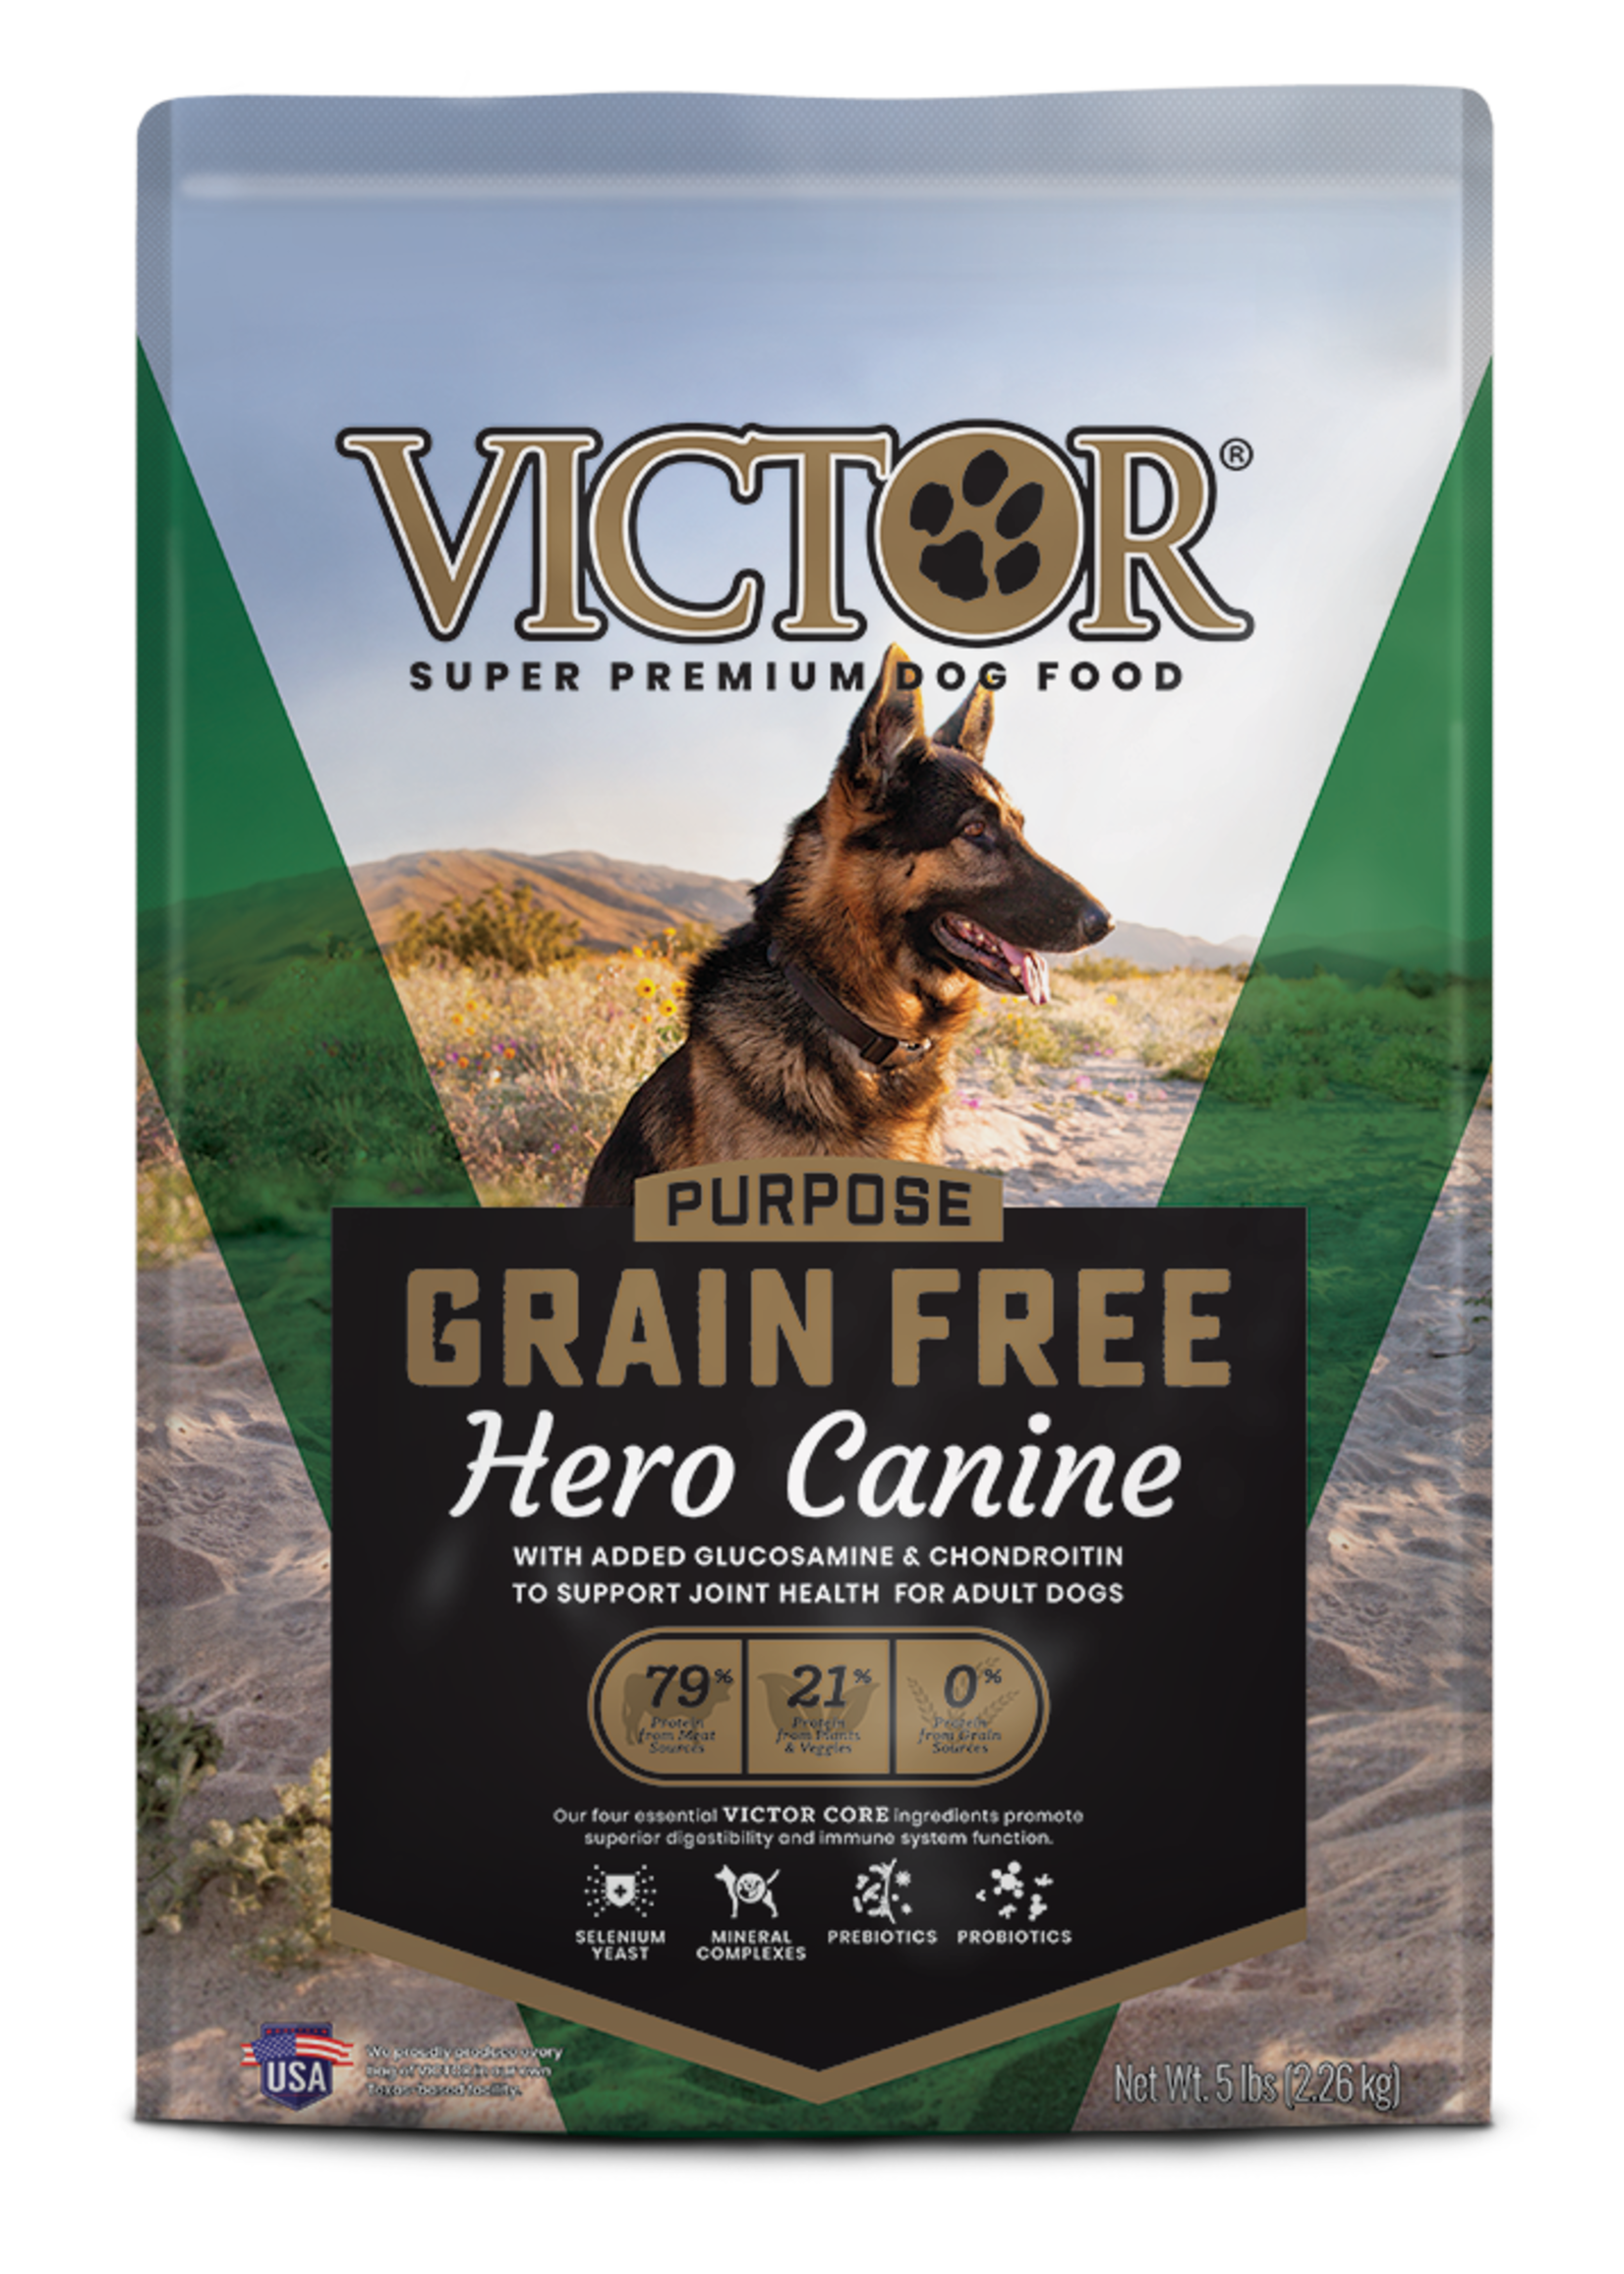 are grain free dog foods good